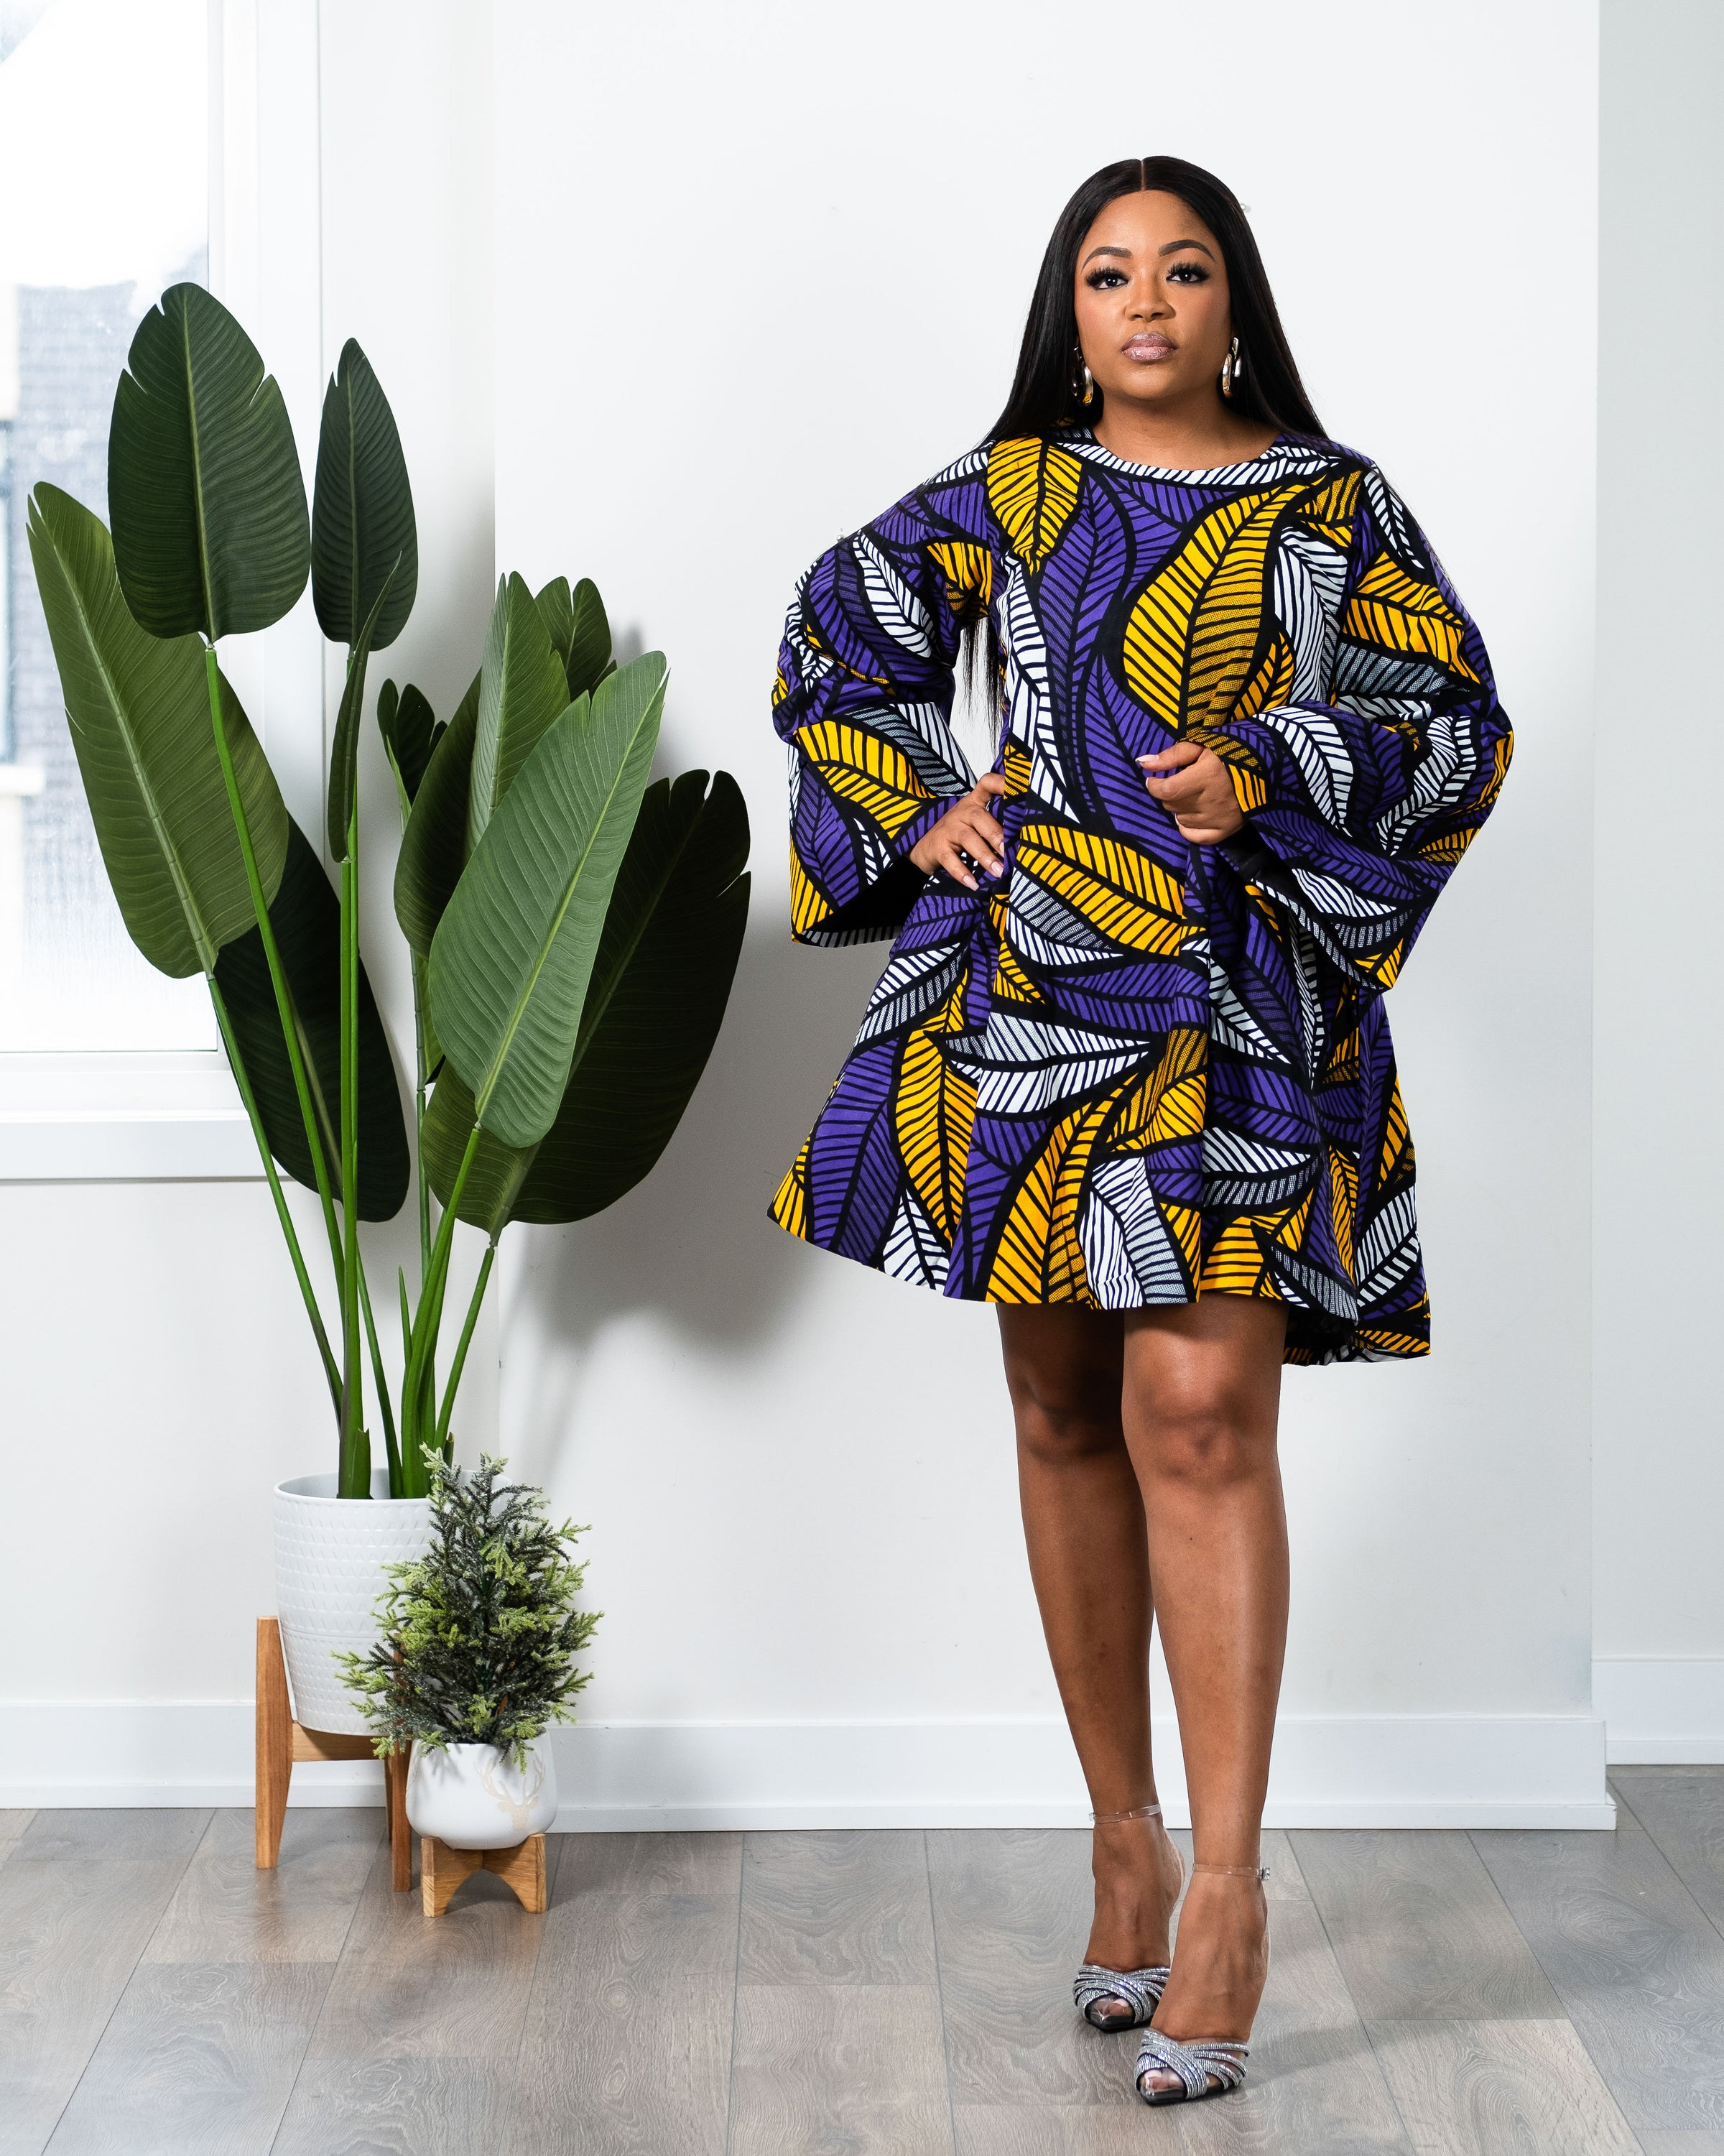 LINDA AFRICAN PRINT ANKARA DRESS